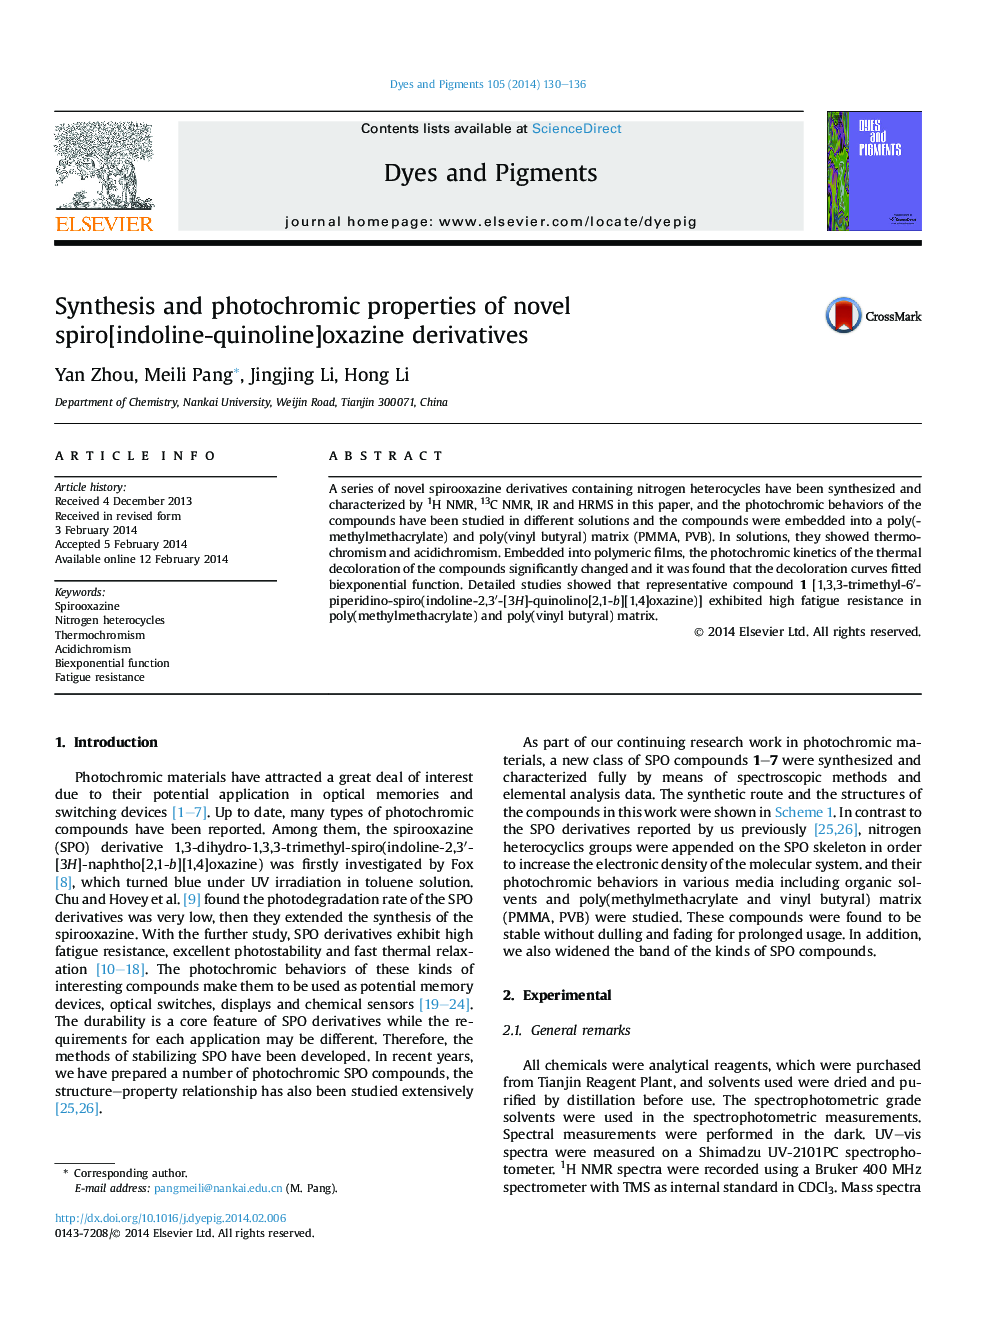 Synthesis and photochromic properties of novel spiro[indoline-quinoline]oxazine derivatives